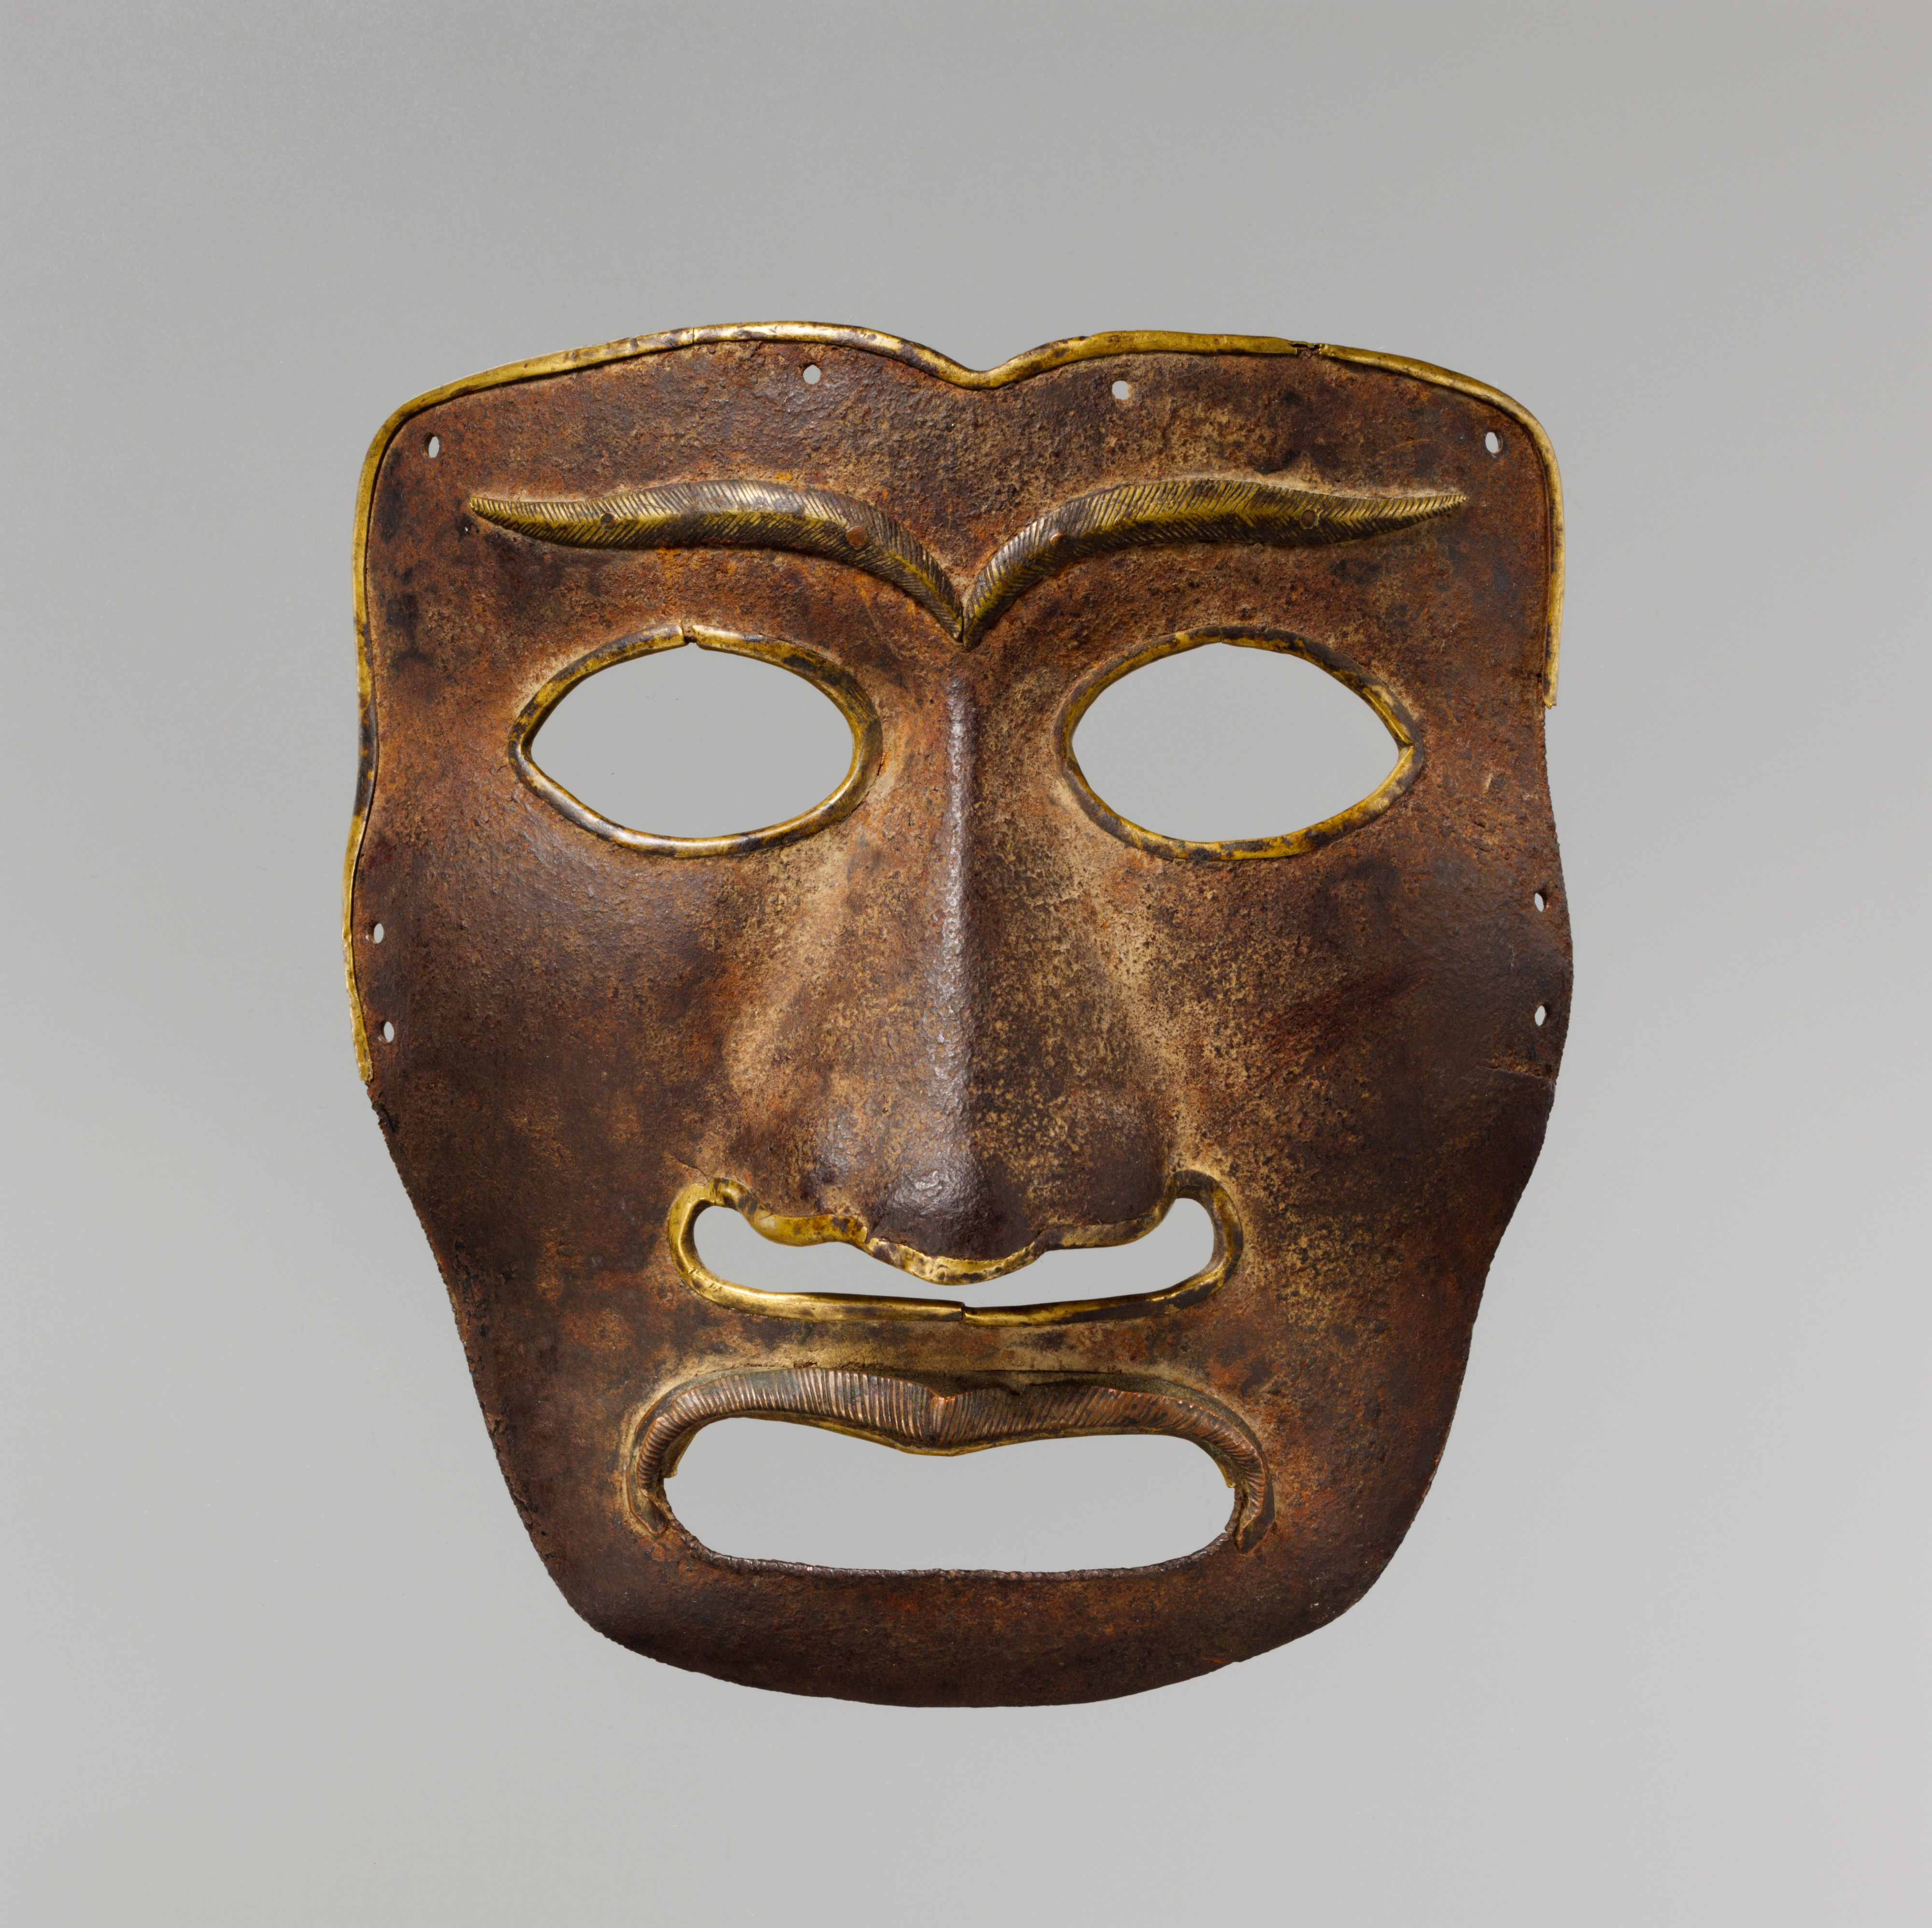 ancient japanese war masks